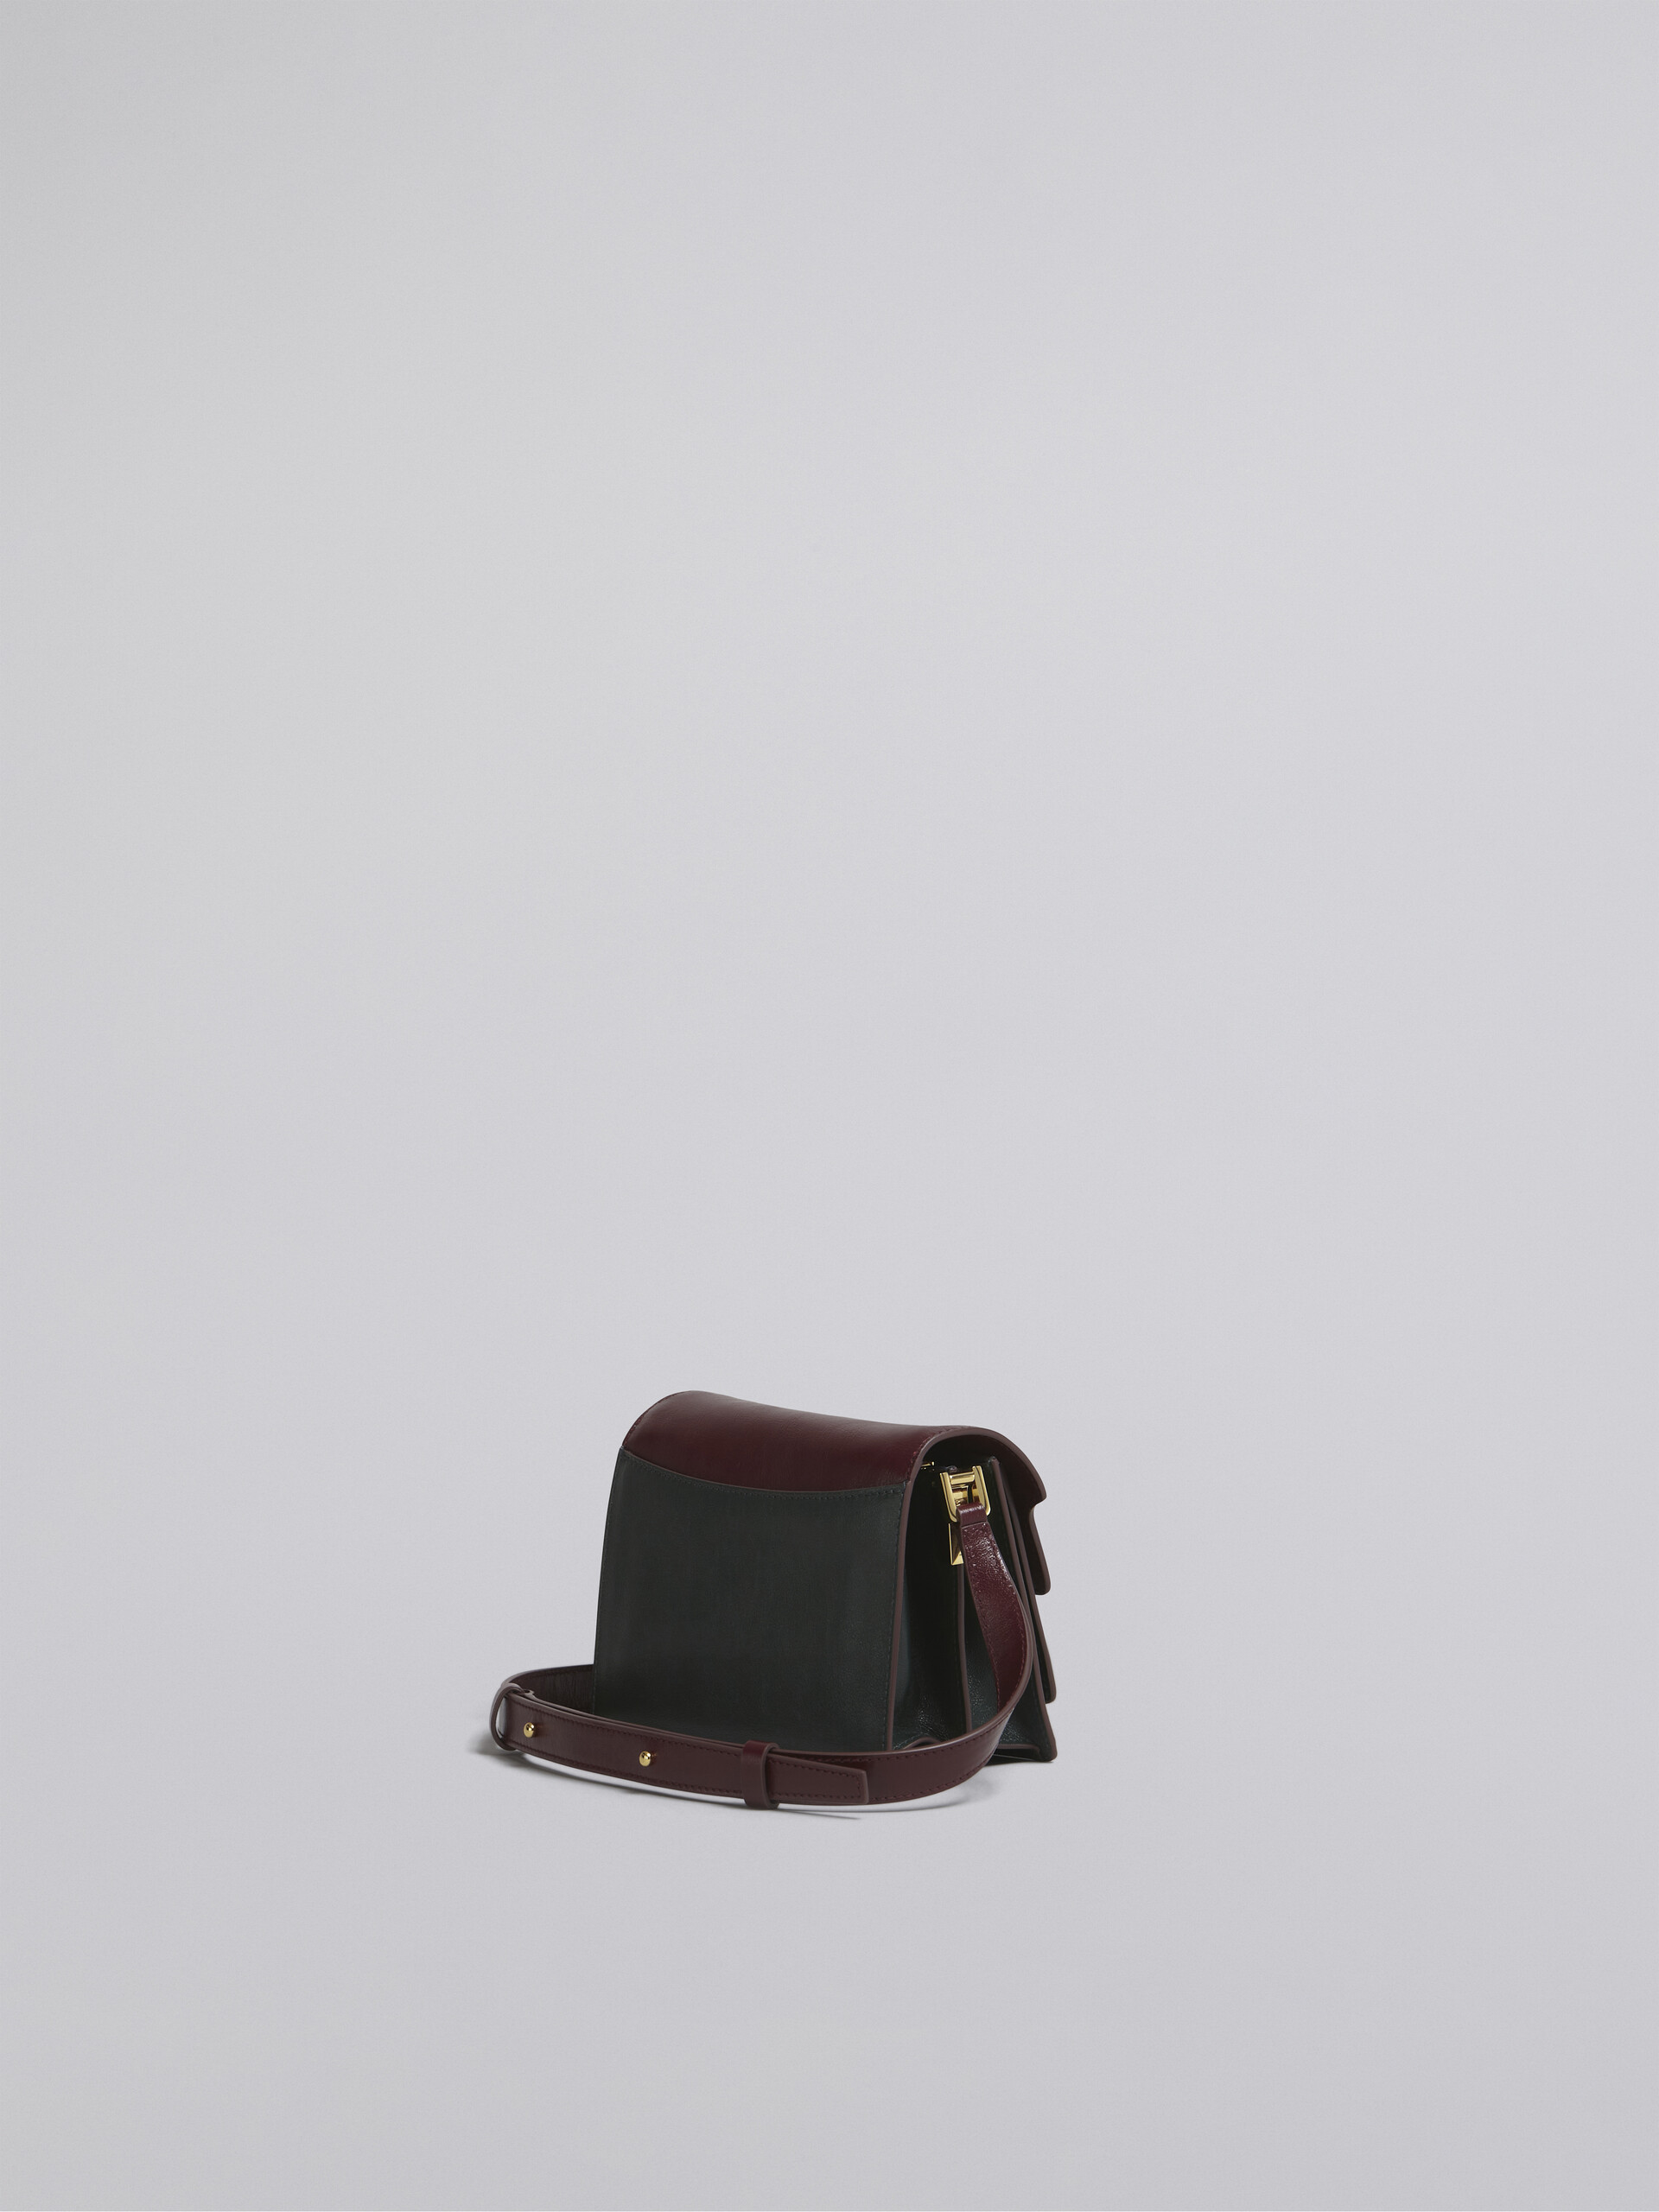 TRUNK SOFT mini bag in green and burgundy leather - Shoulder Bag - Image 2